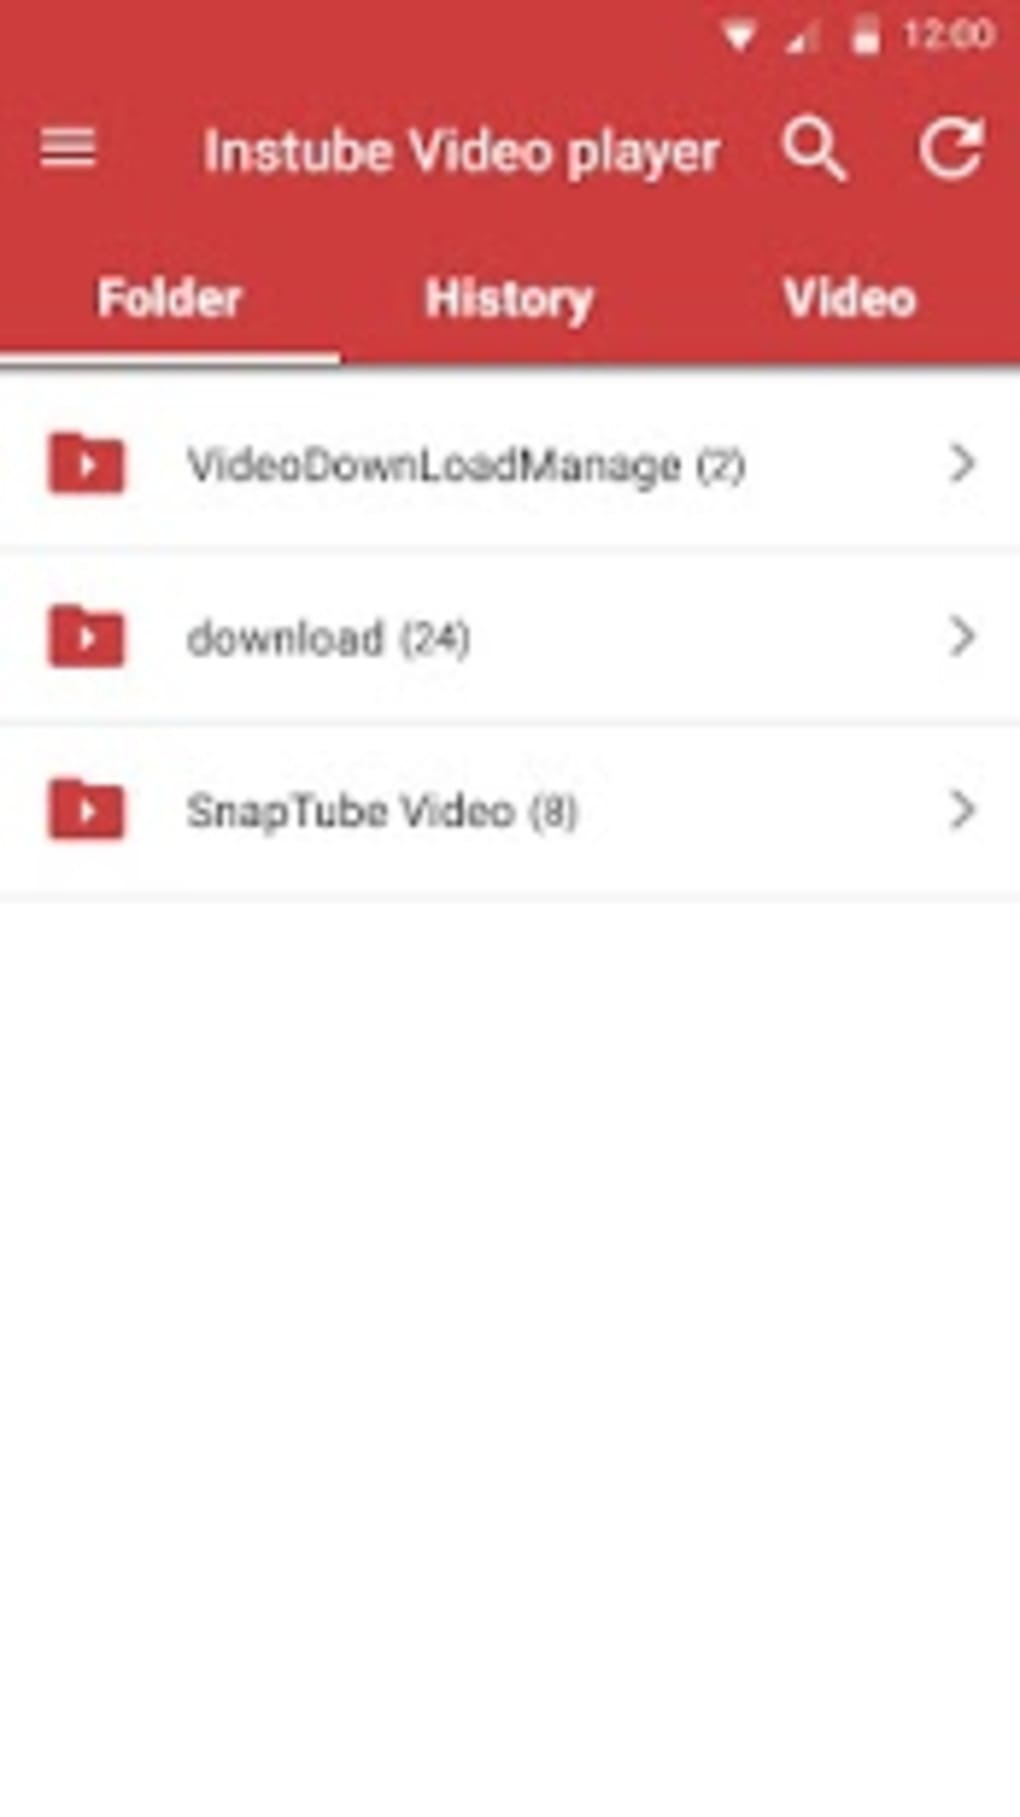 4K Video Download App - Download 4K Video with InsTube